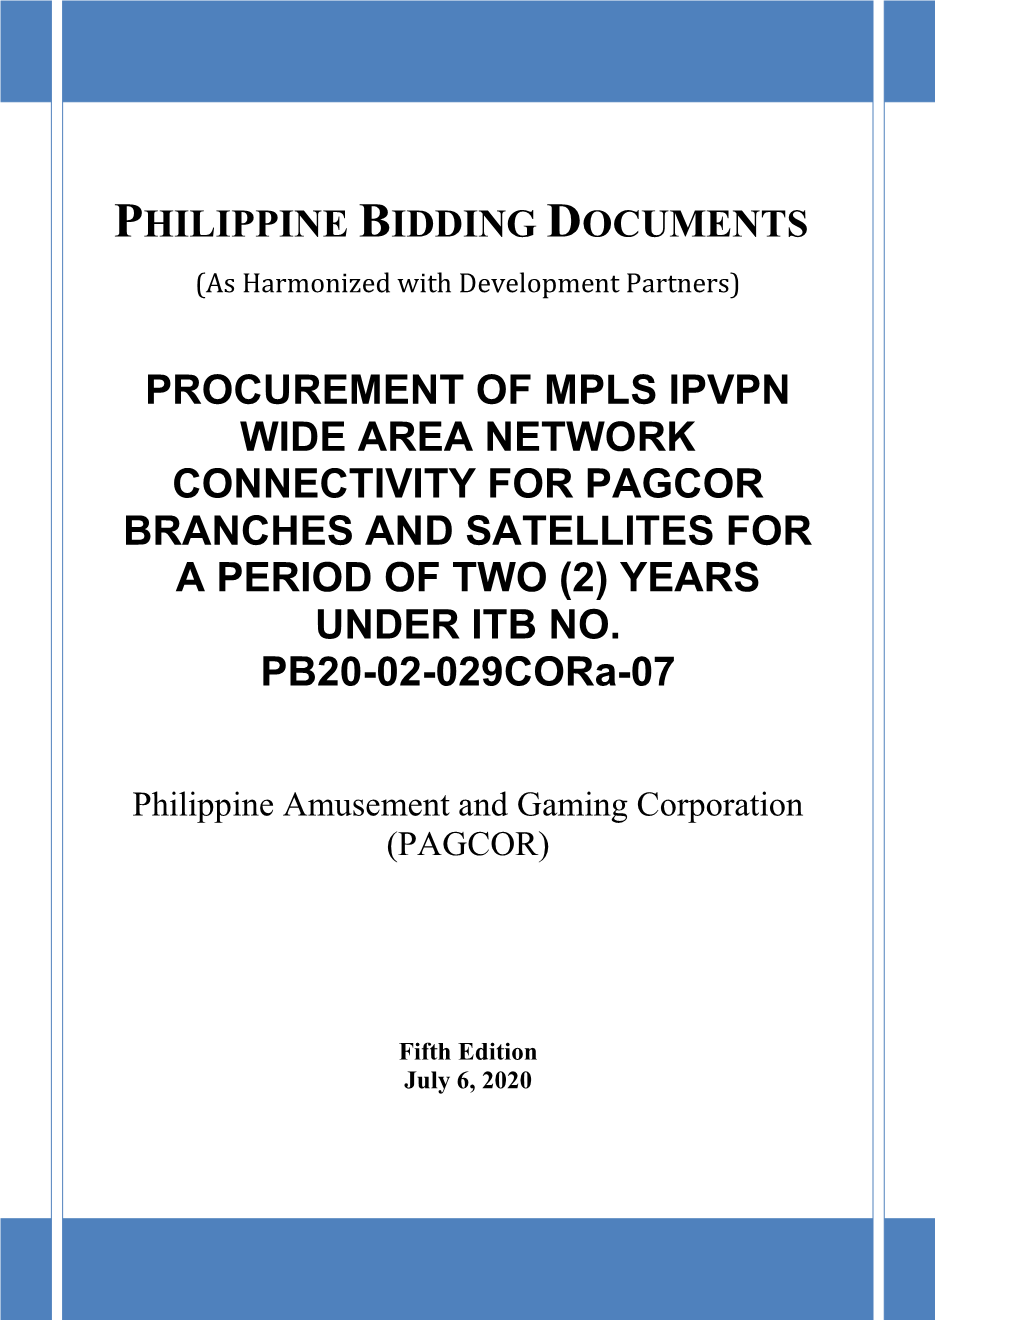 PHILIPPINE BIDDING DOCUMENTS (As Harmonized with Development Partners)